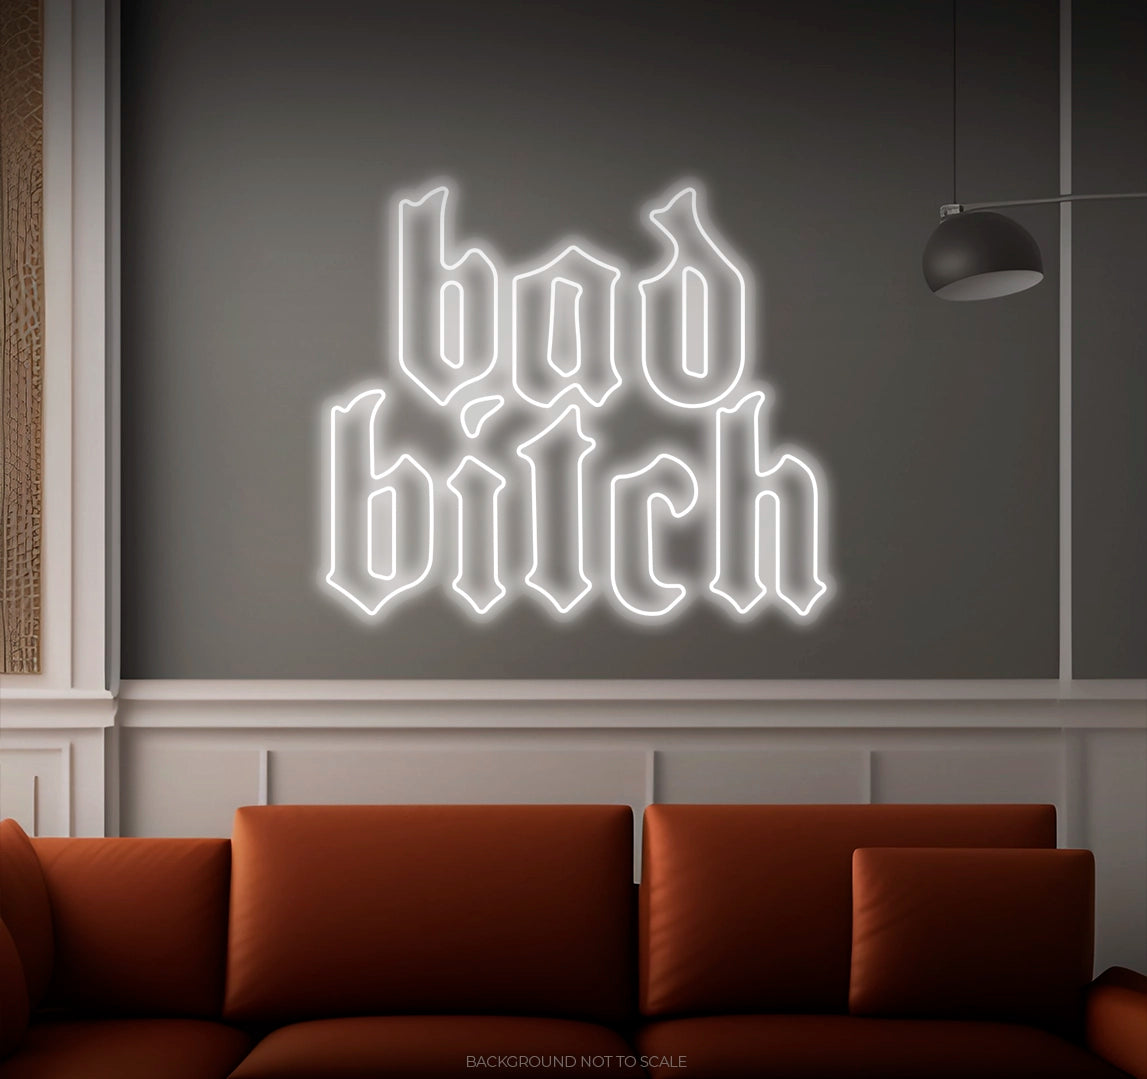 Gothic bad bitch LED neon